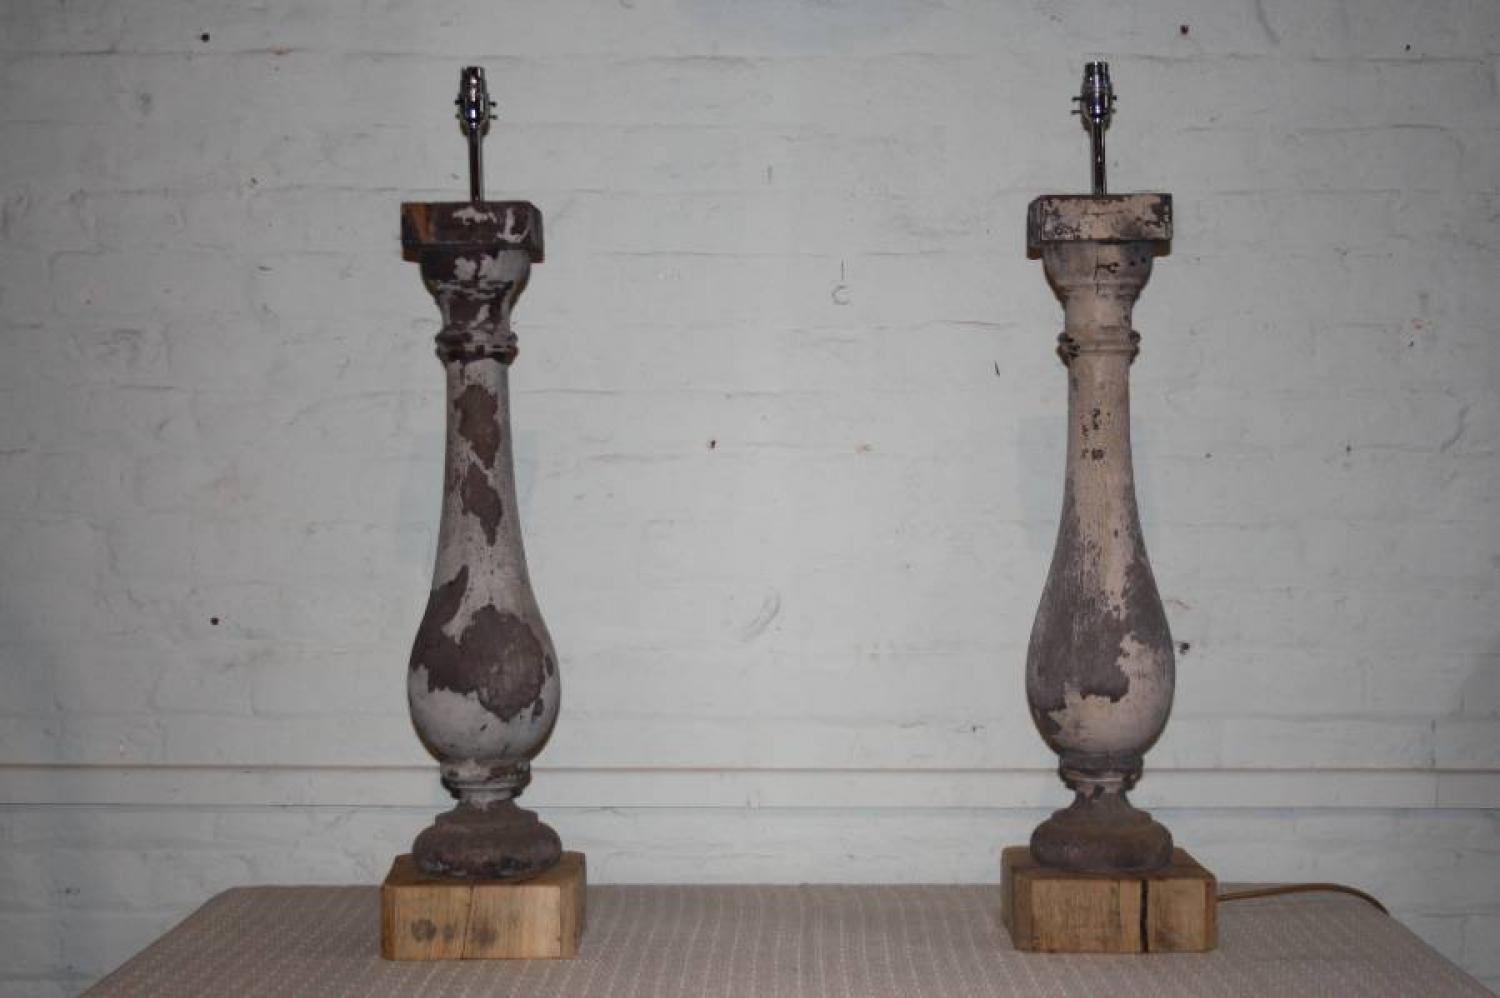 Pair of Balustrade Lamps